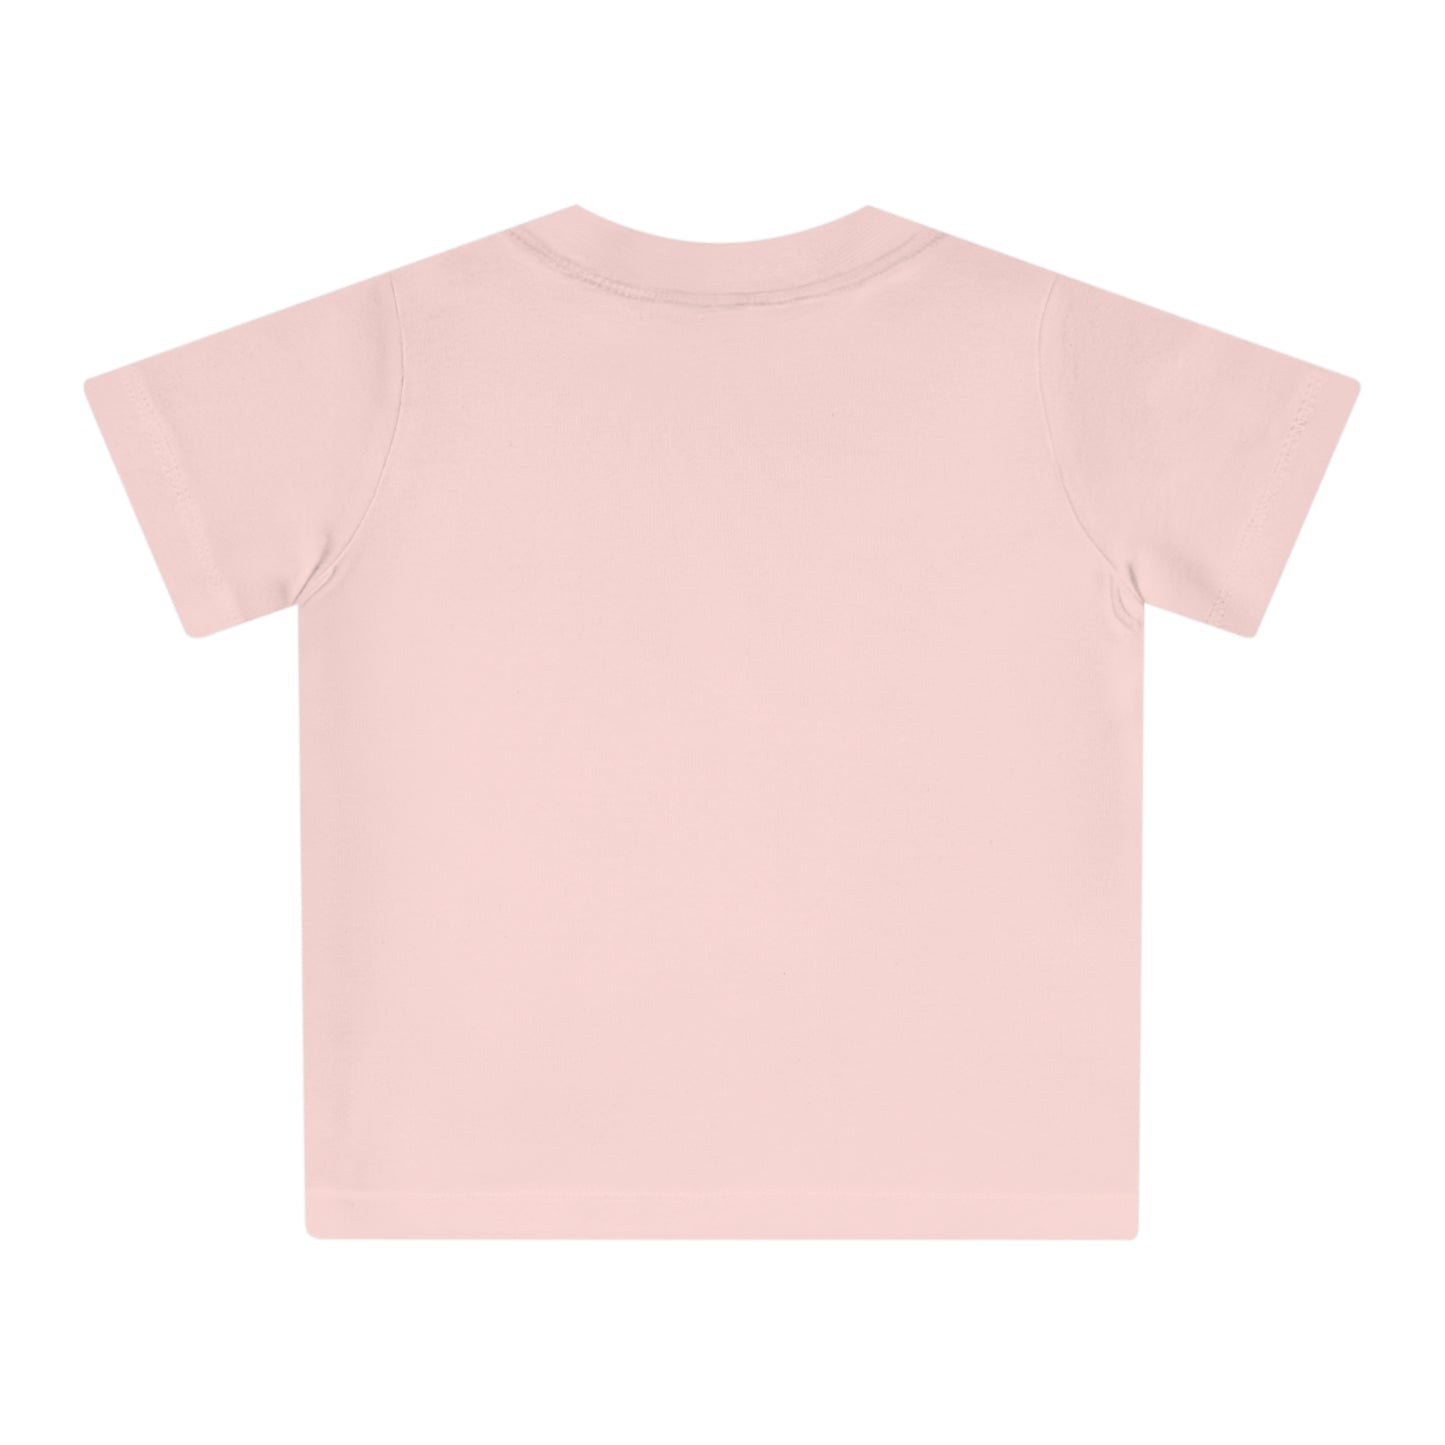 Snugs for Nugs - Baby T-Shirt